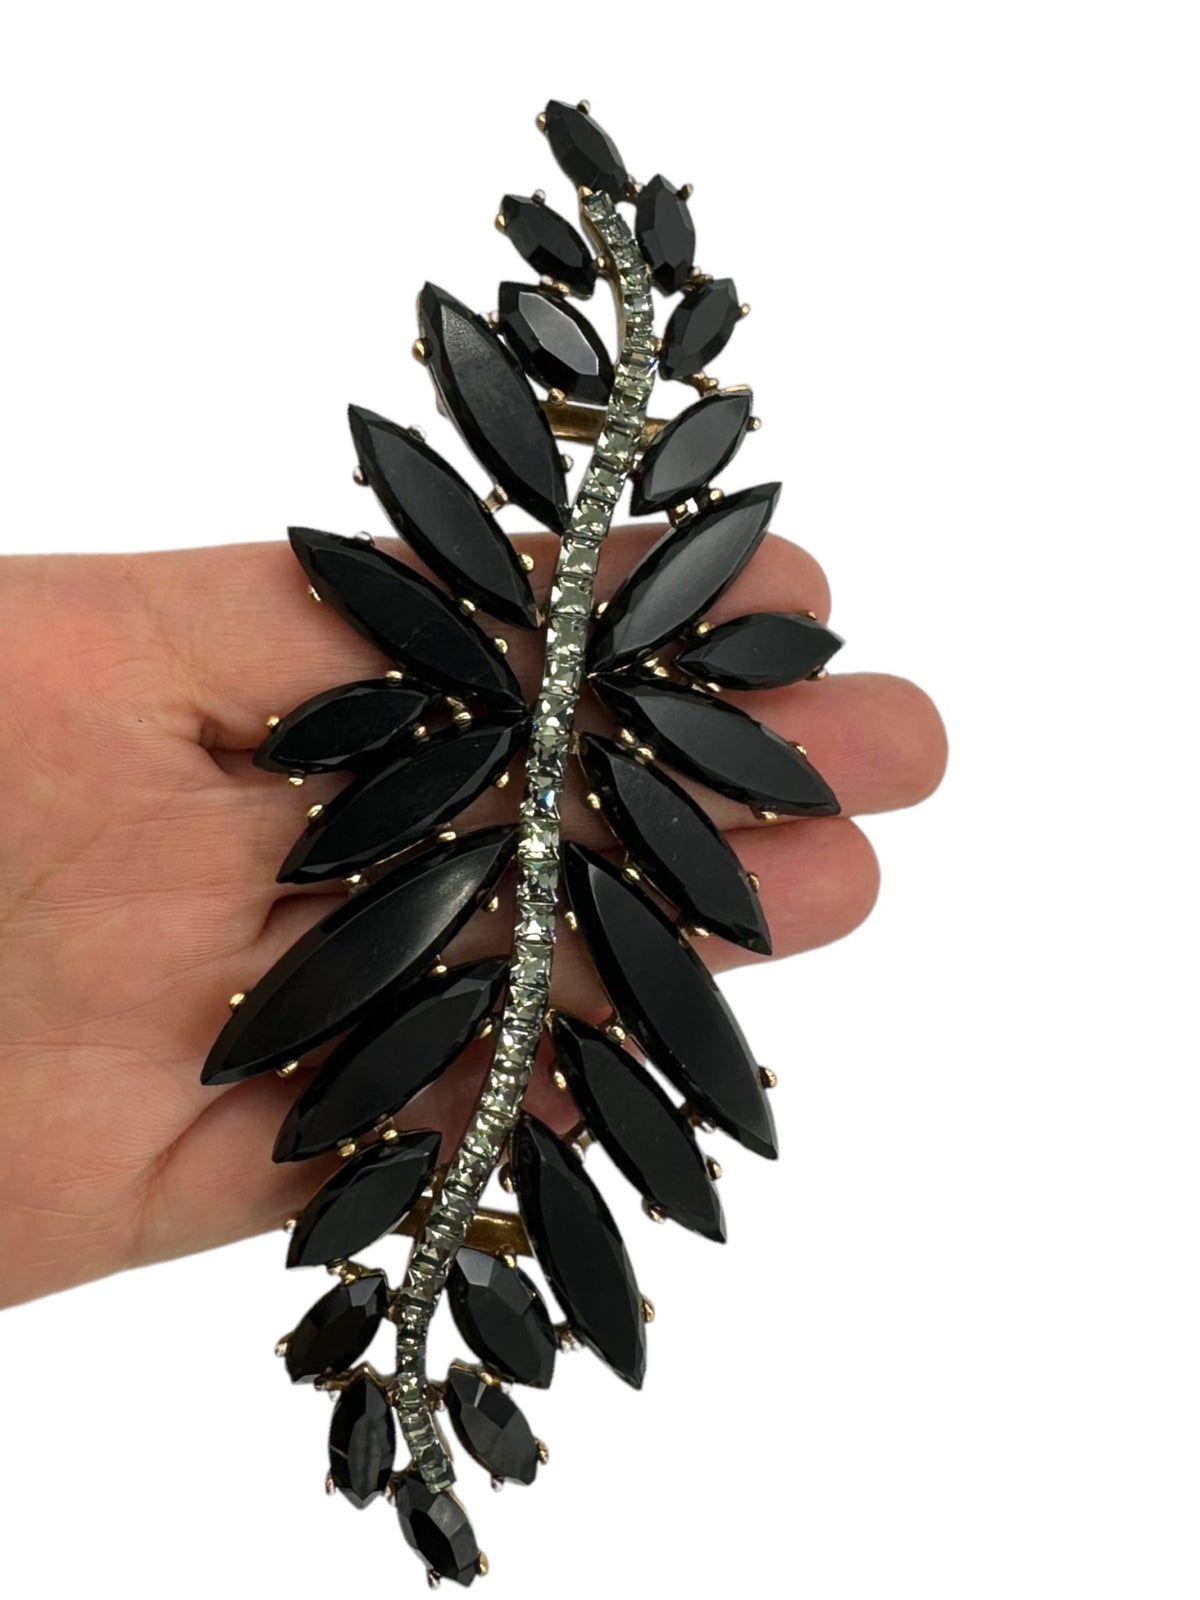 Oscar de la Renta Black Floral Rhinestone Statement Belt Buckle - 24 Wishes Vintage Jewelry